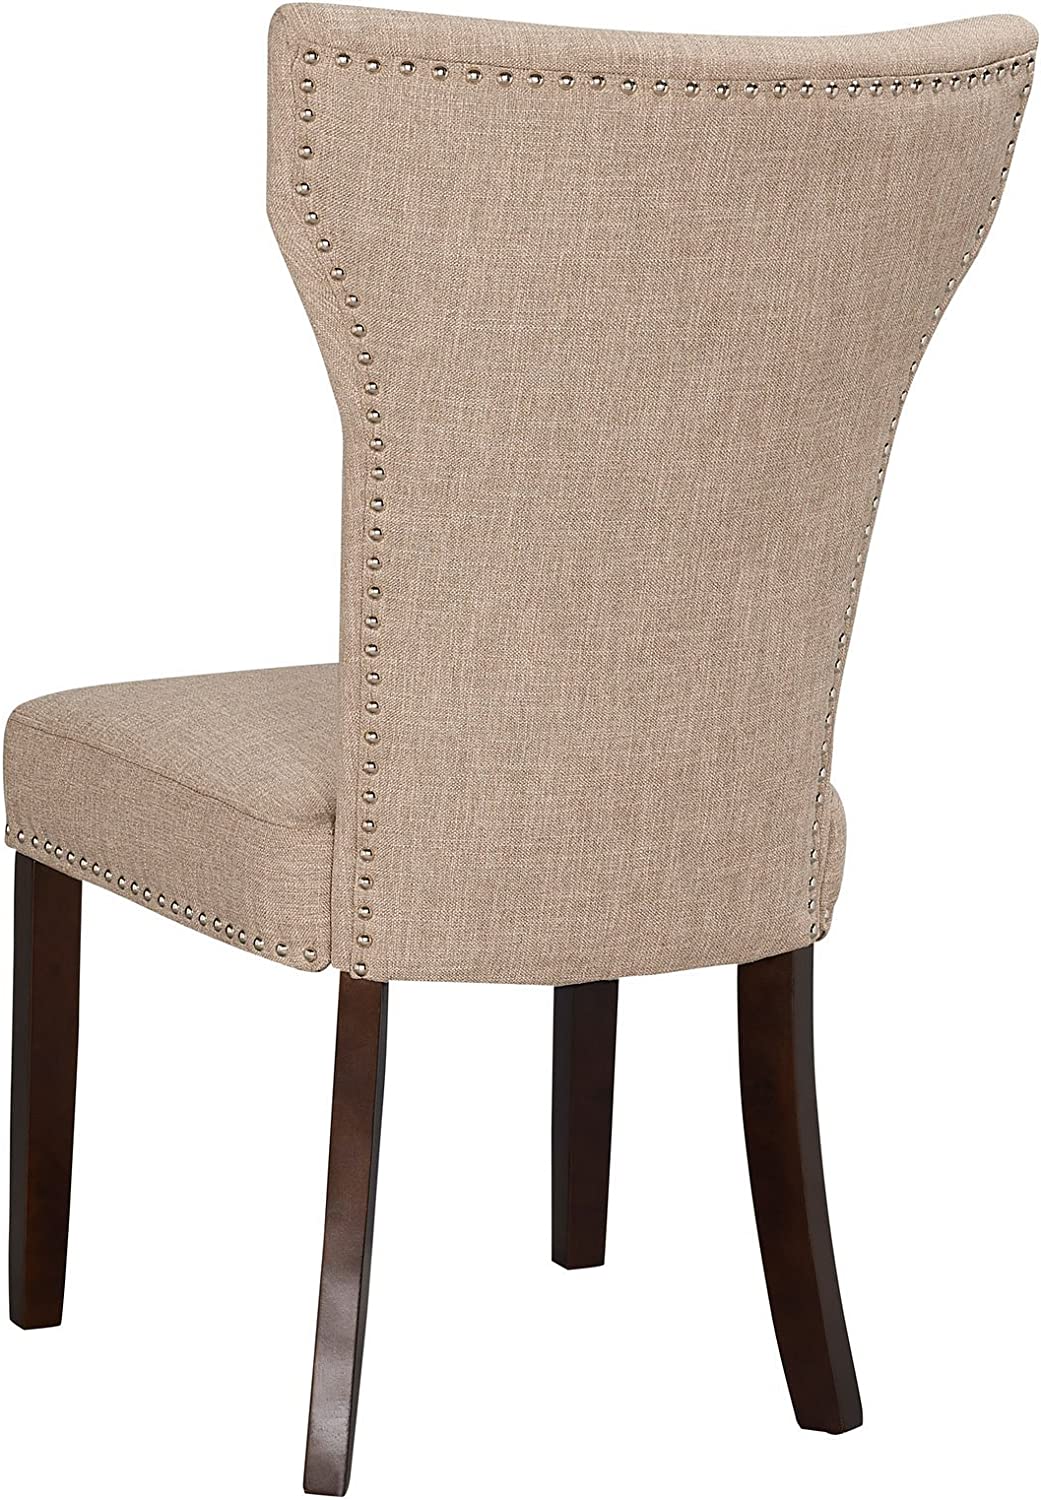 Boraam Monaco Parsons Dining Chair - Set of 2 - White Sand